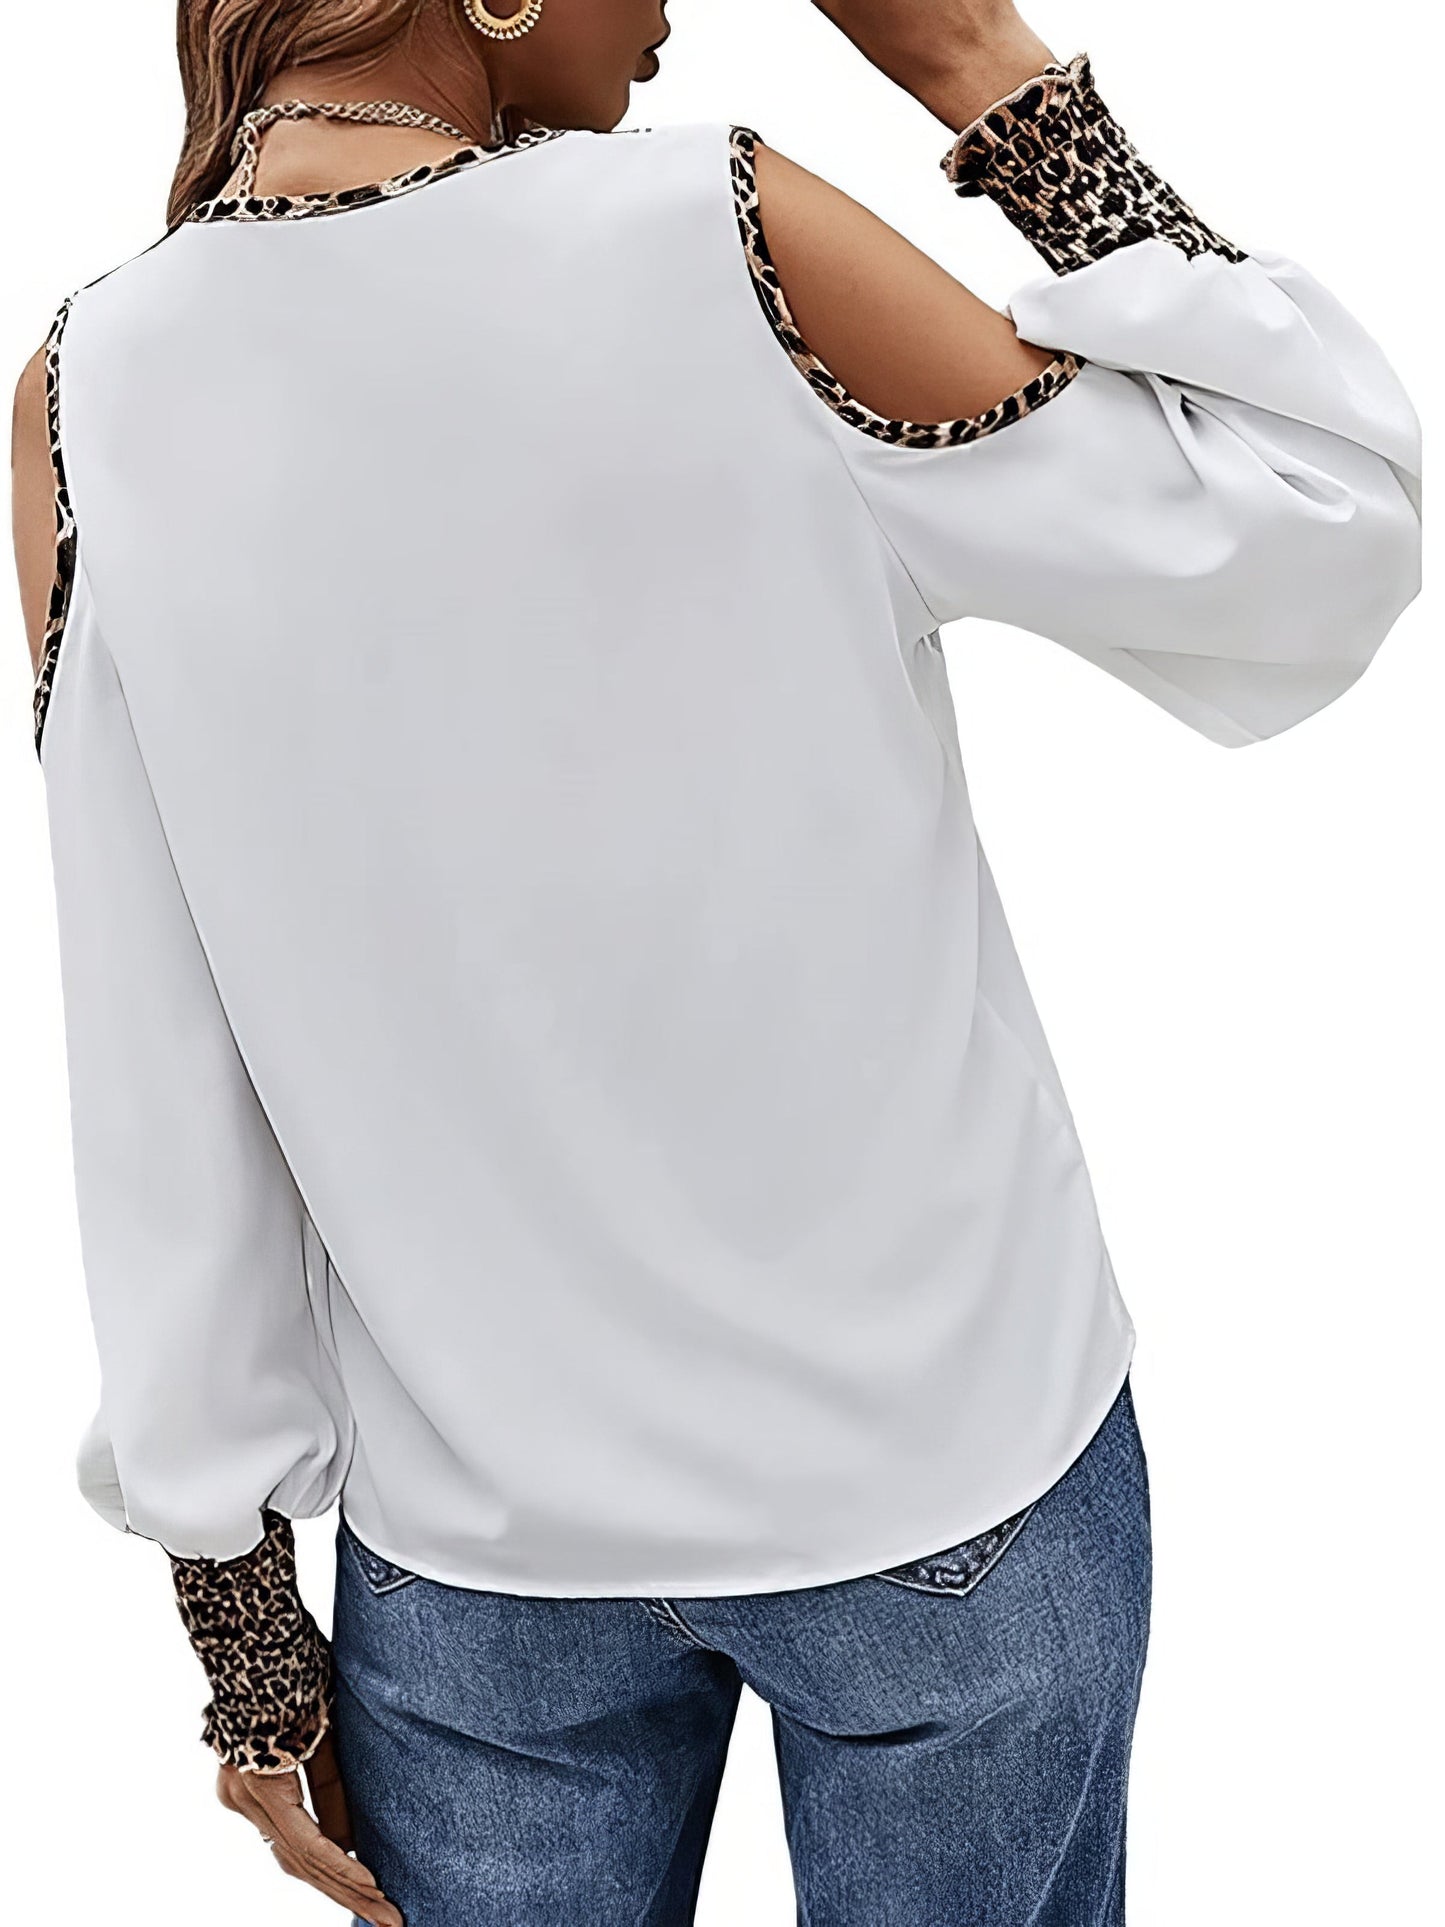 T-Shirts - Leopard Print Stitching V Neck Button Off-The-Shoulder T-Shirt - MsDressly